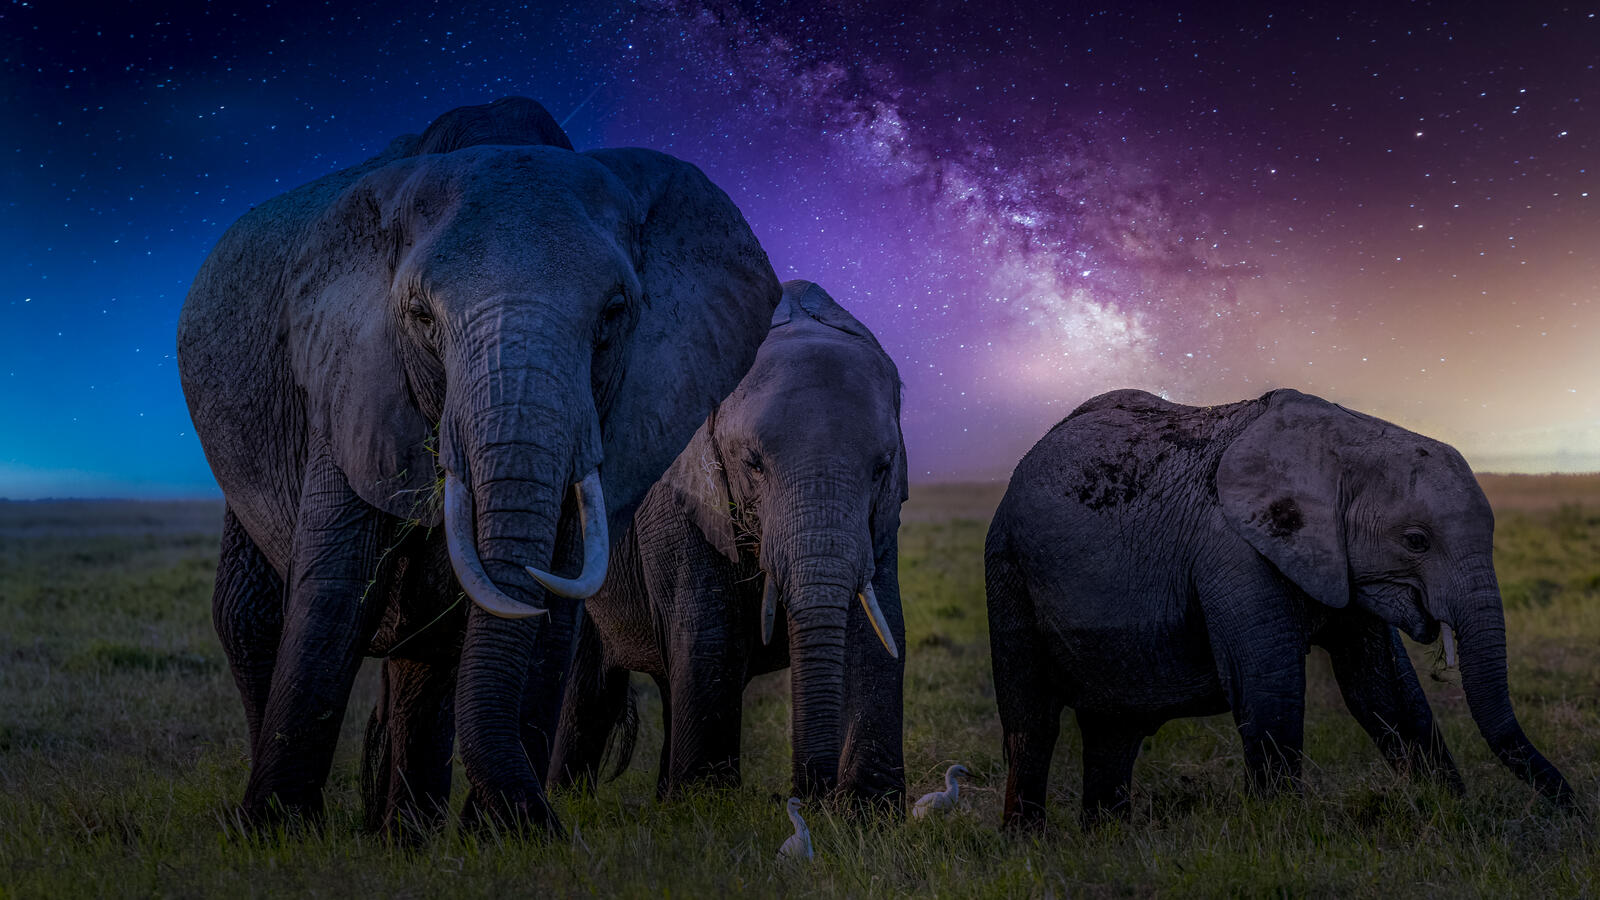 Wallpapers Kenya Africa elephants on the desktop